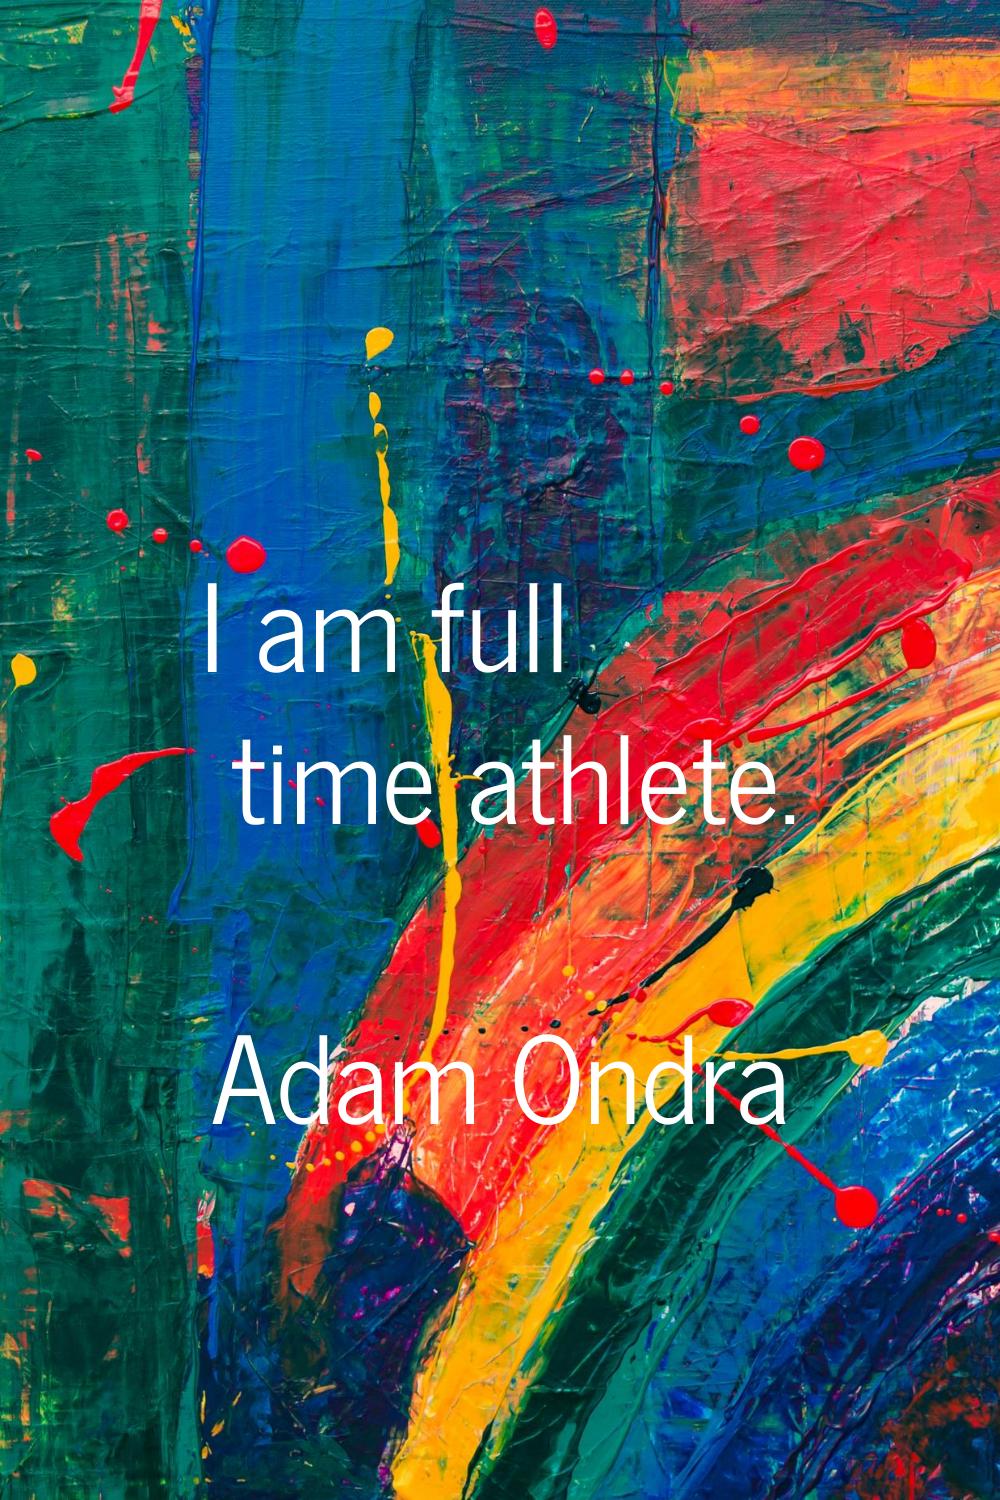 I am full time athlete.